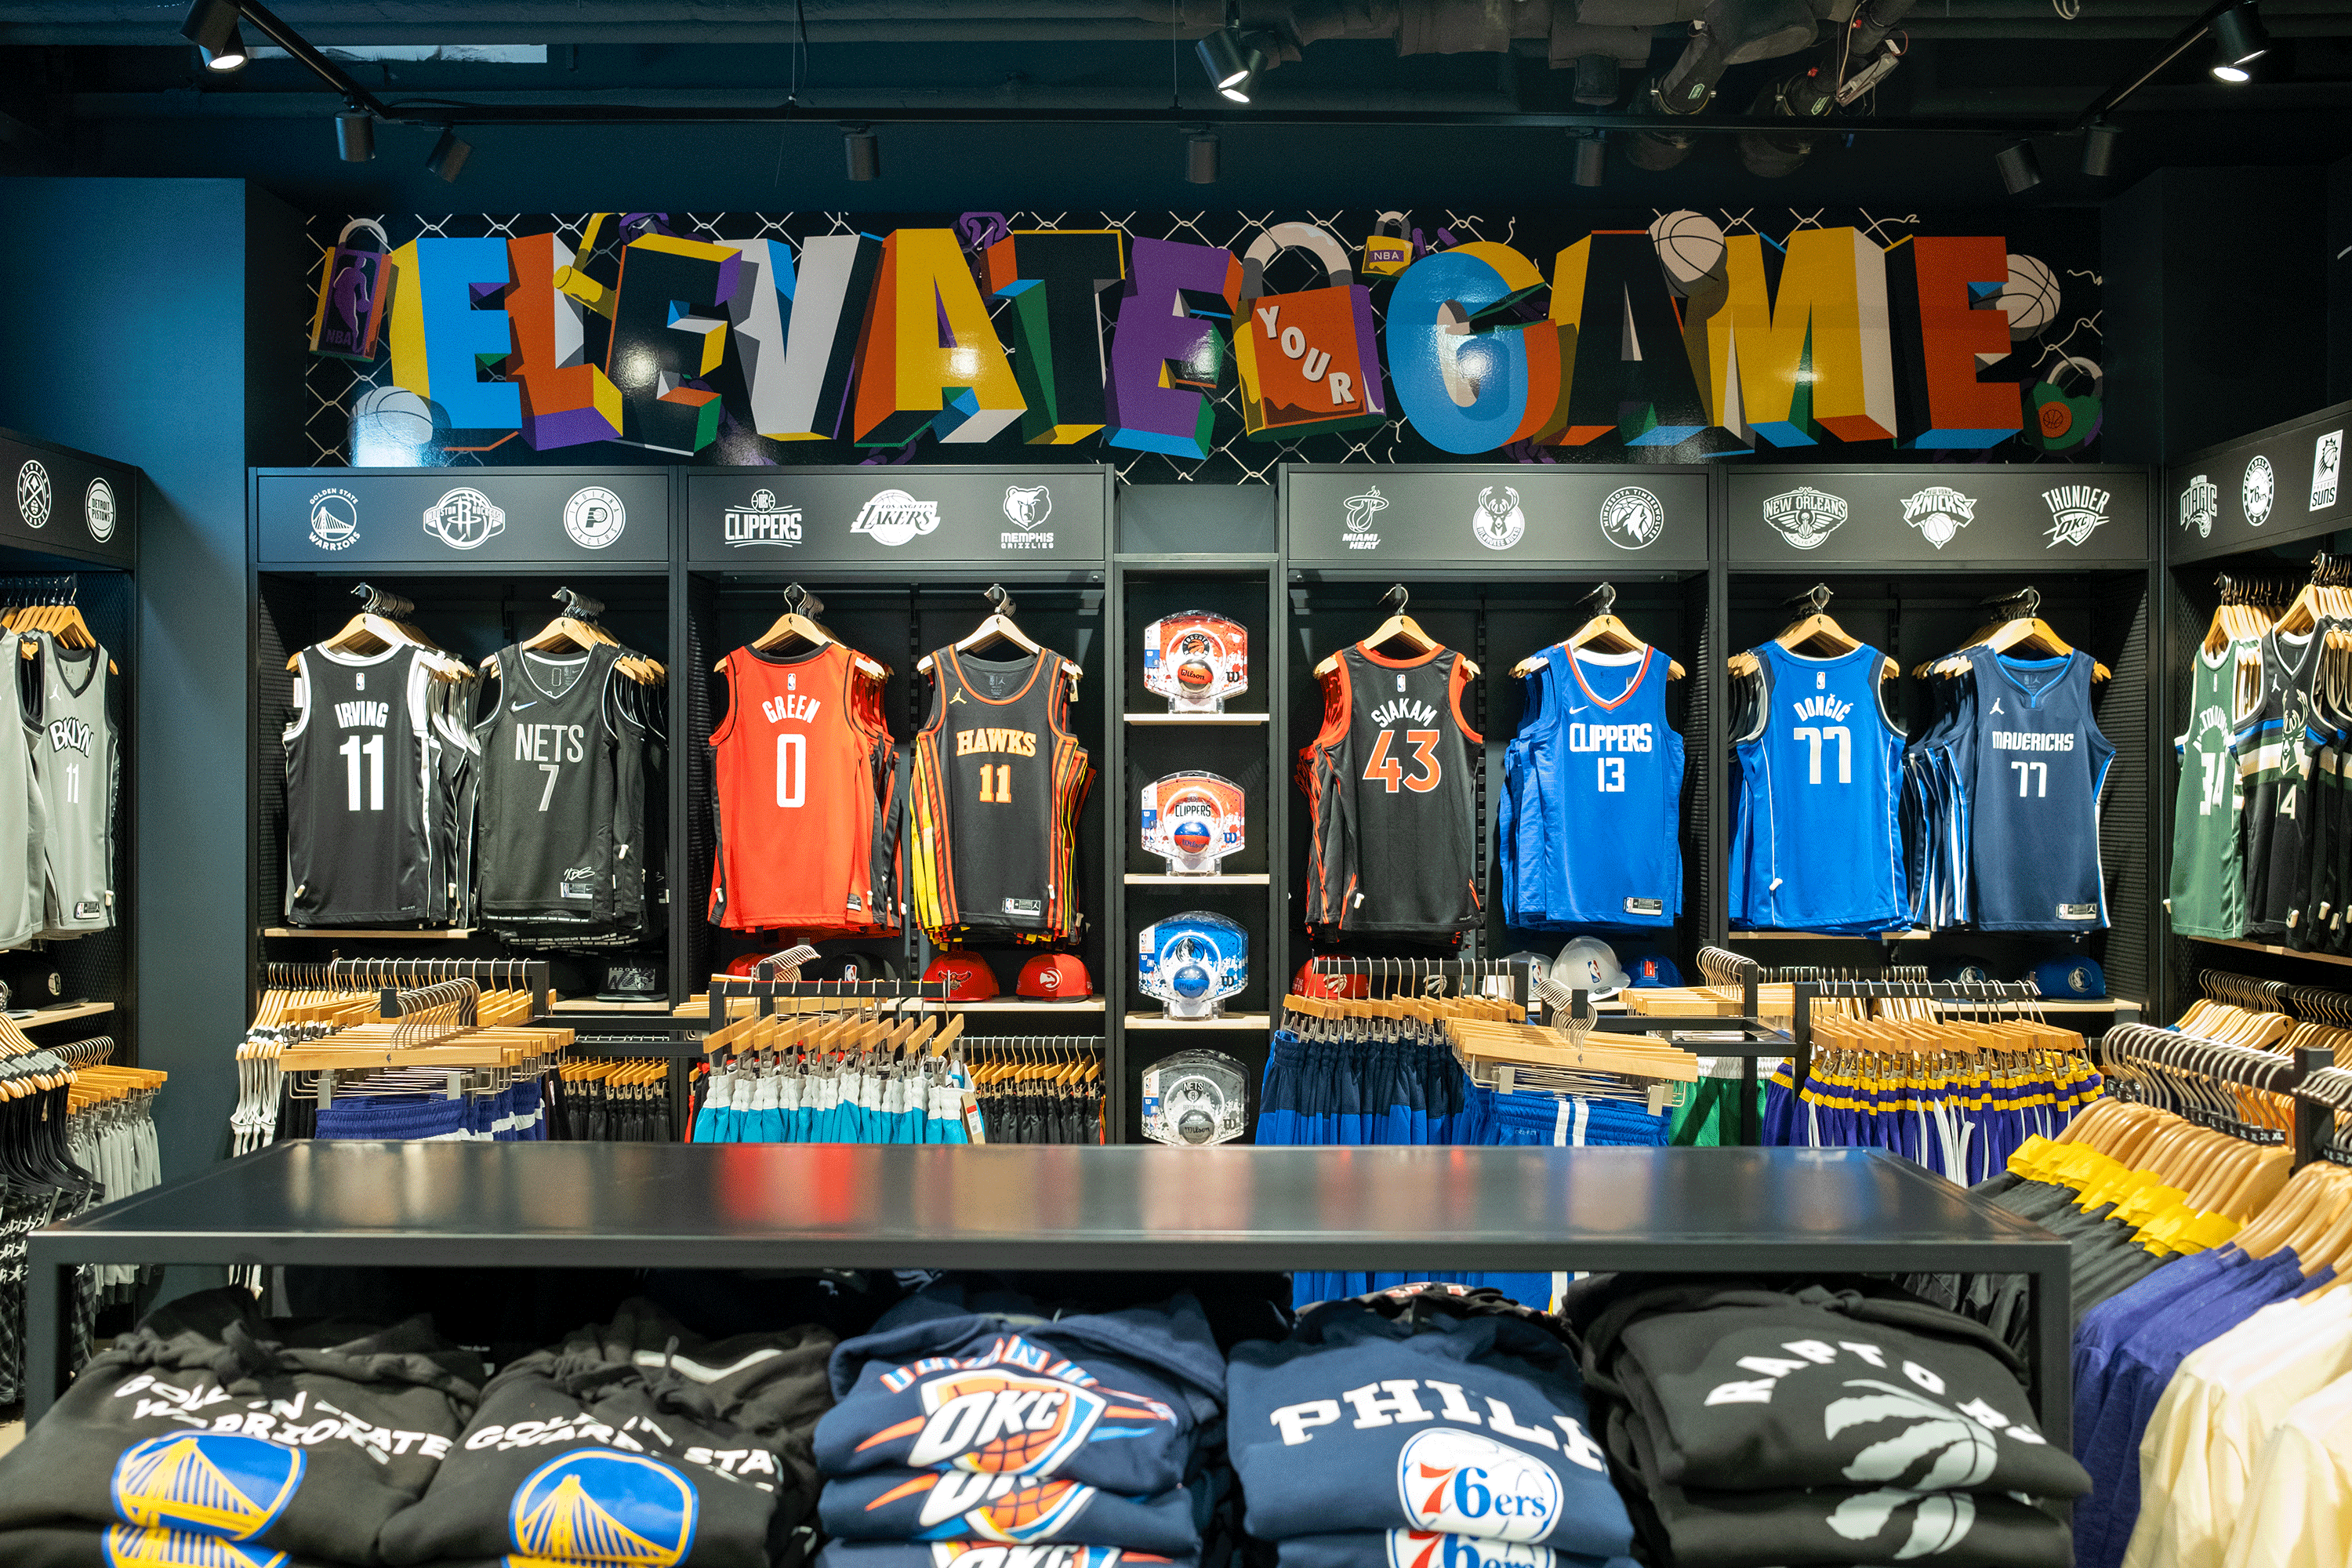 NBA store Berlin